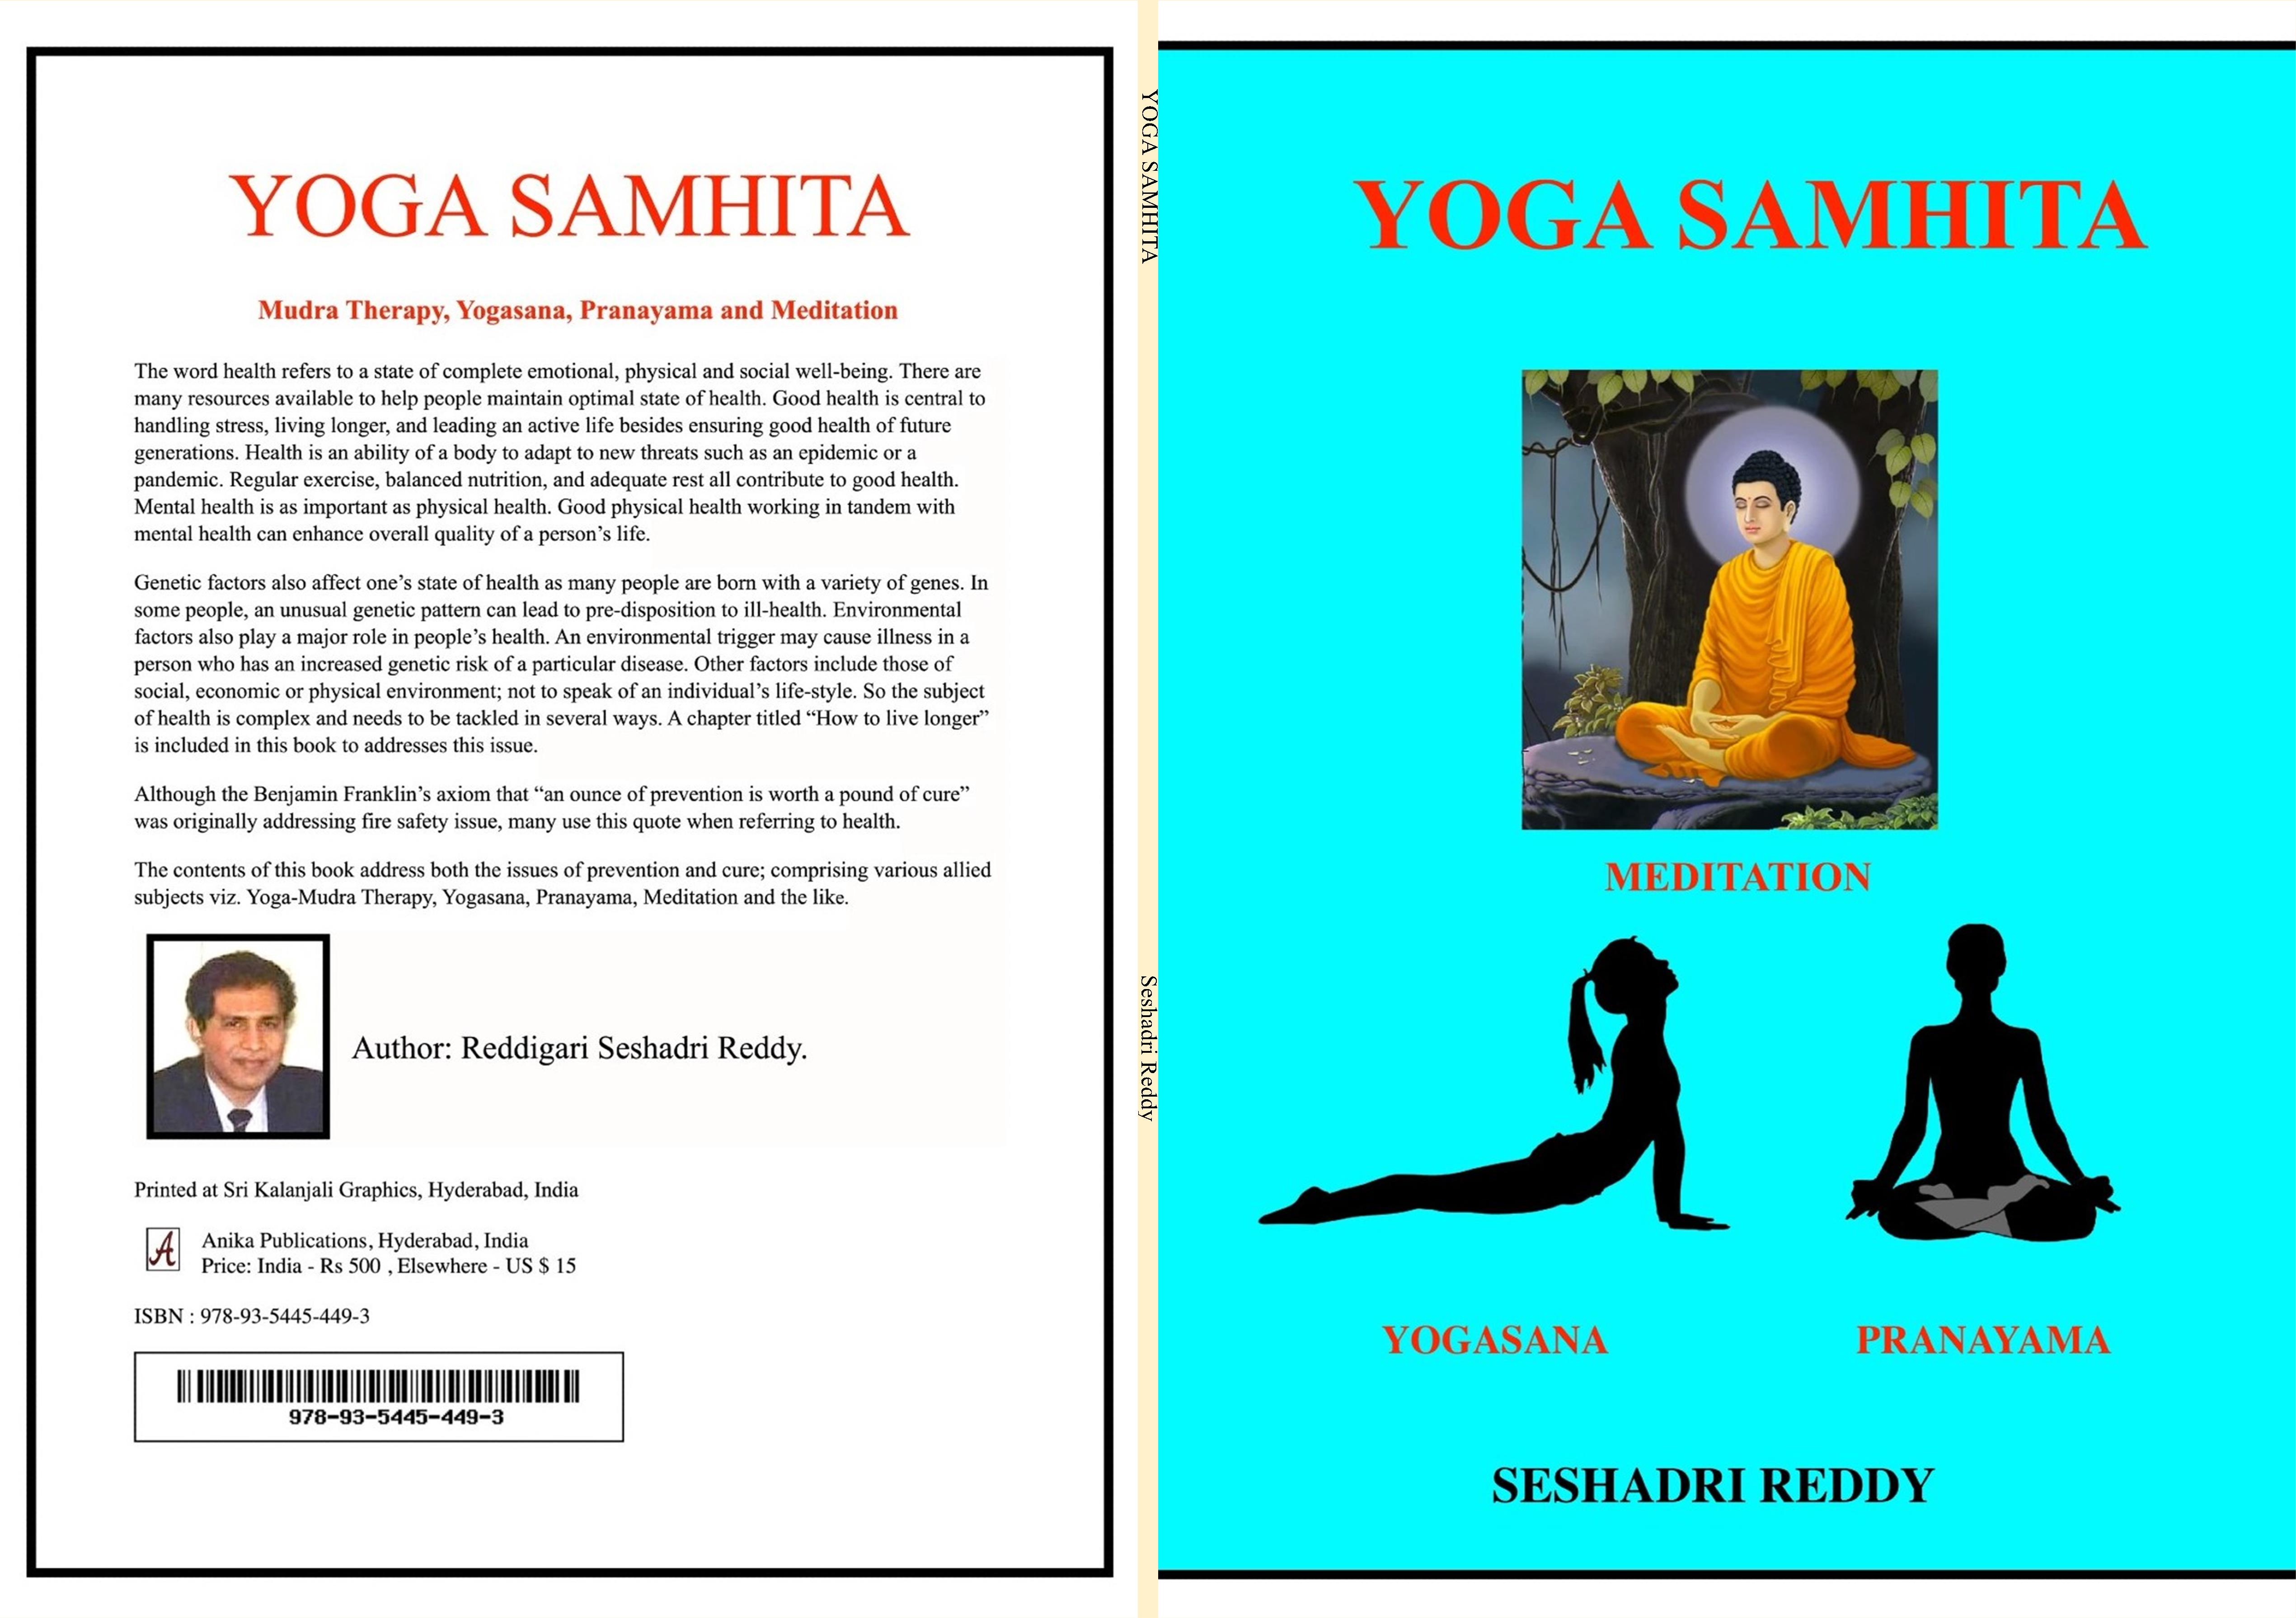 YOGA SAMHITA cover image